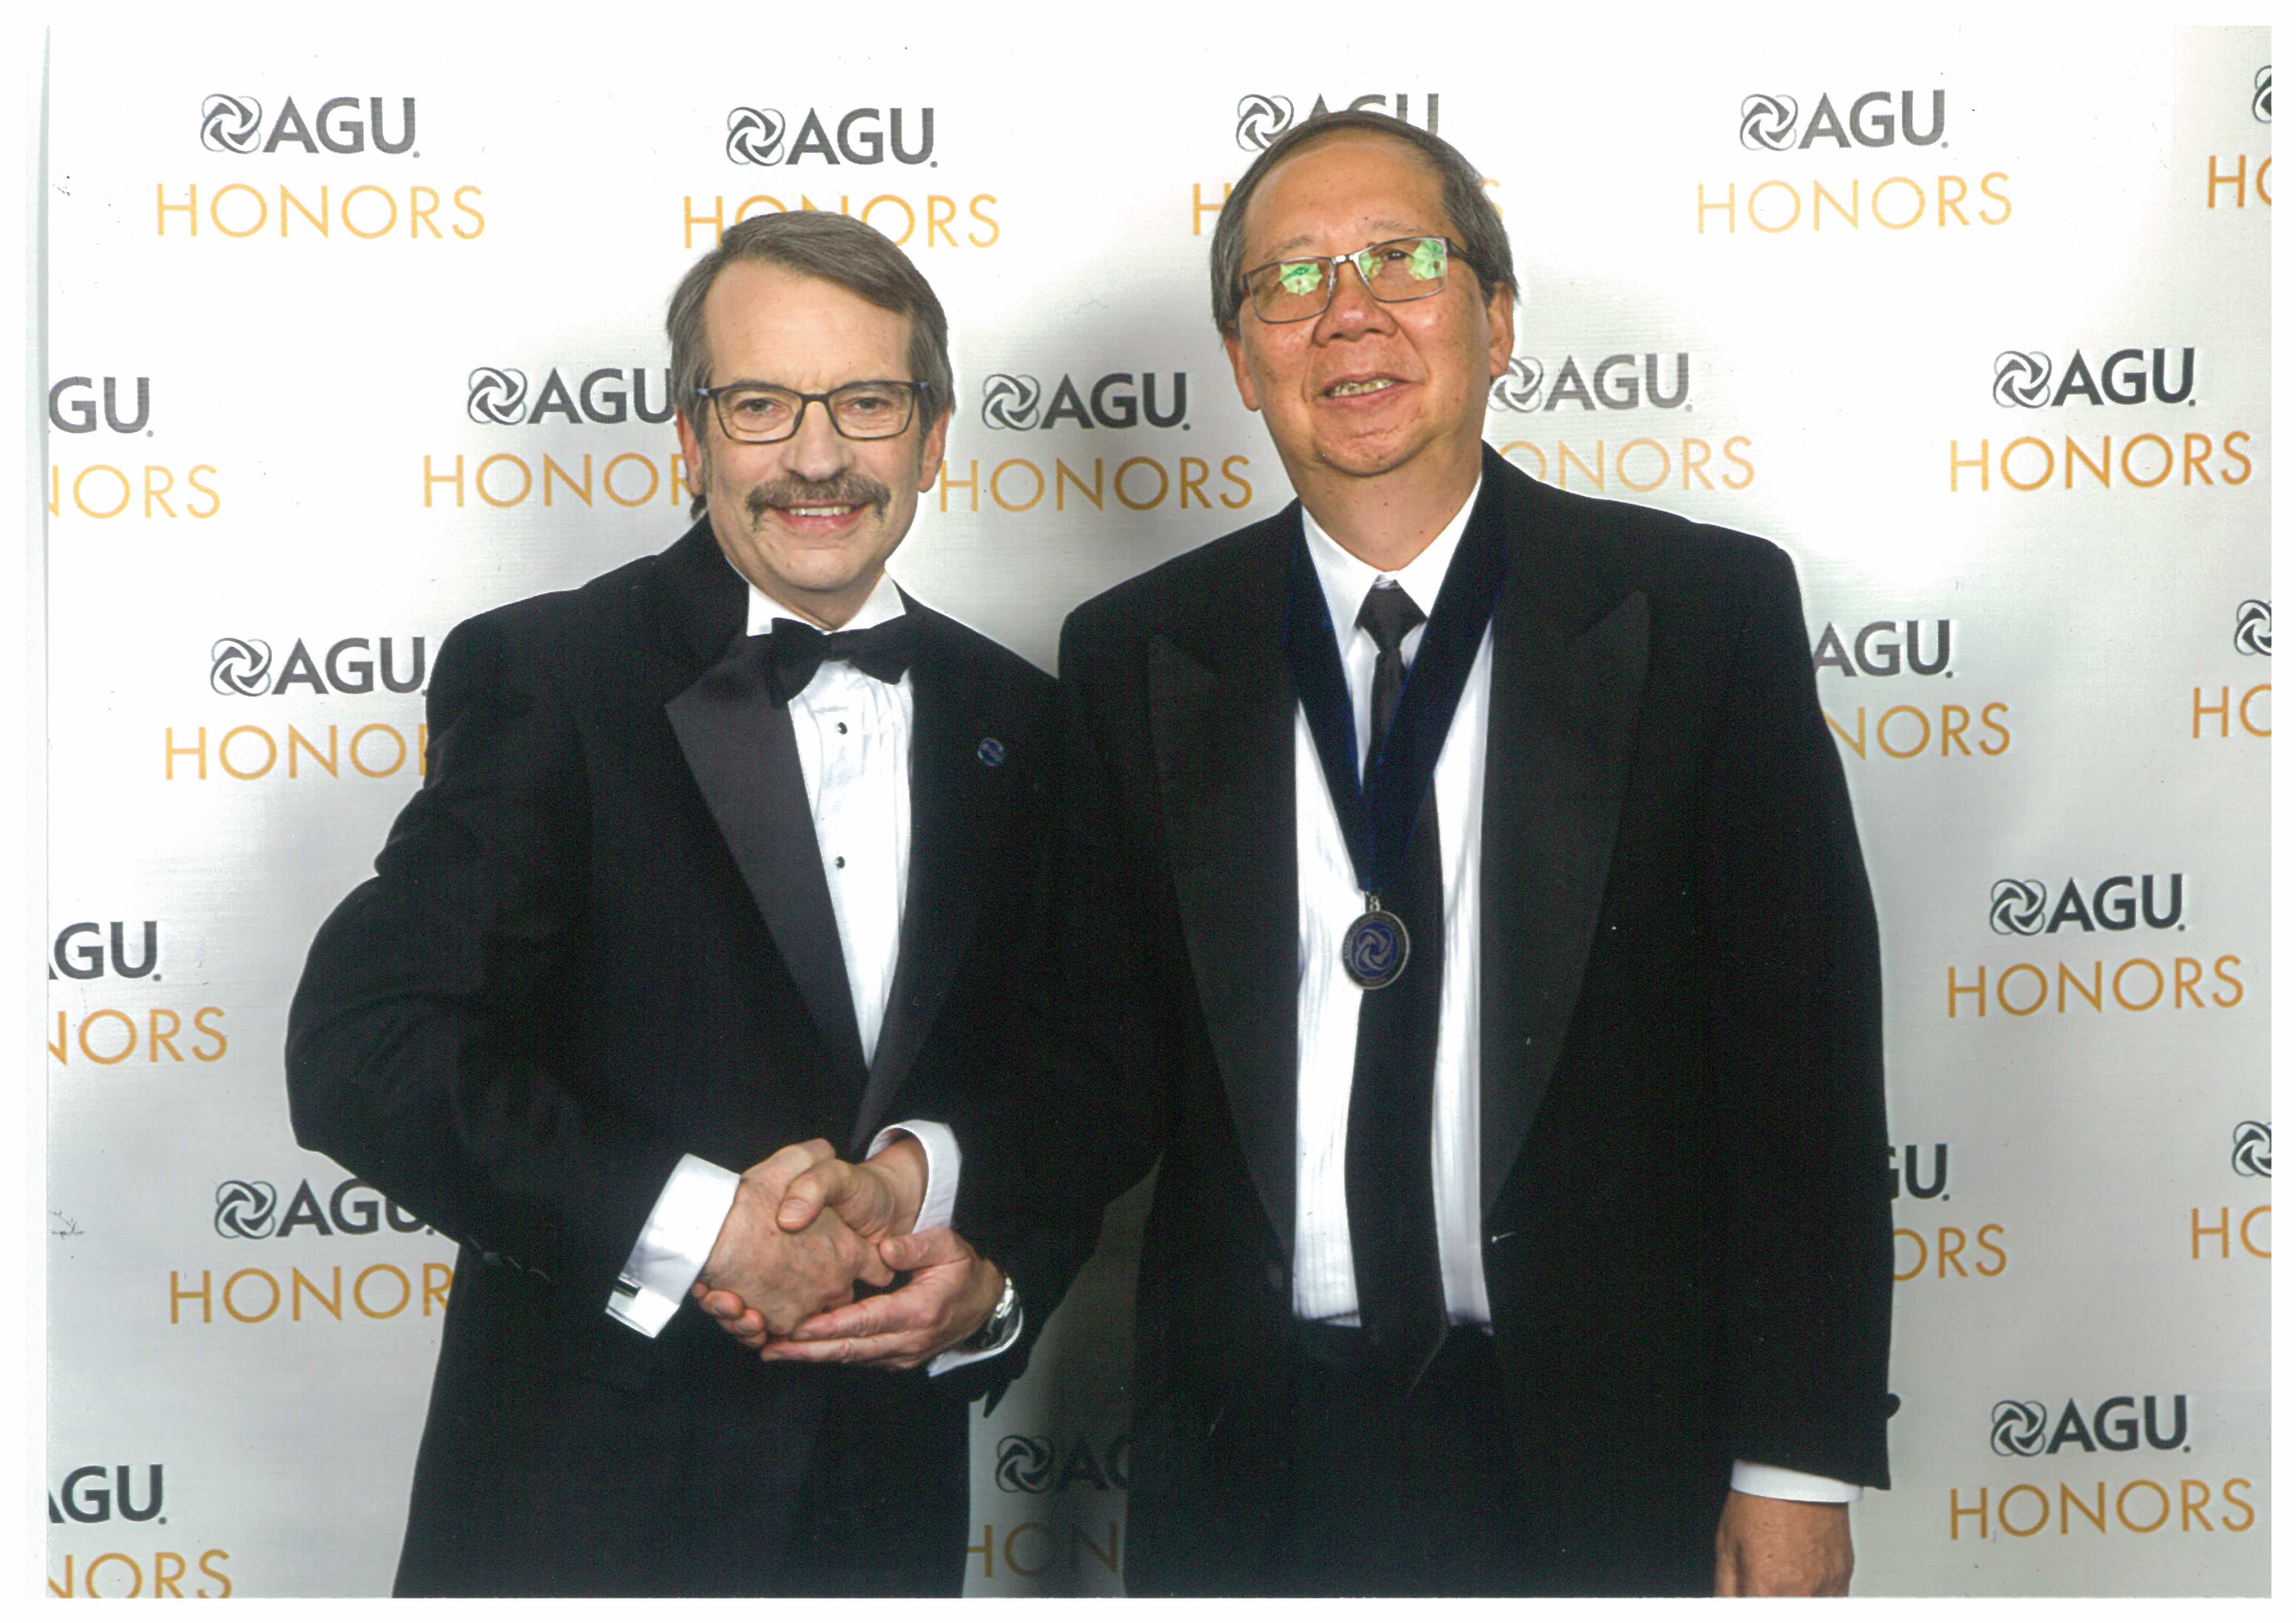 Photo with AGU President - Professor Eric Davidson